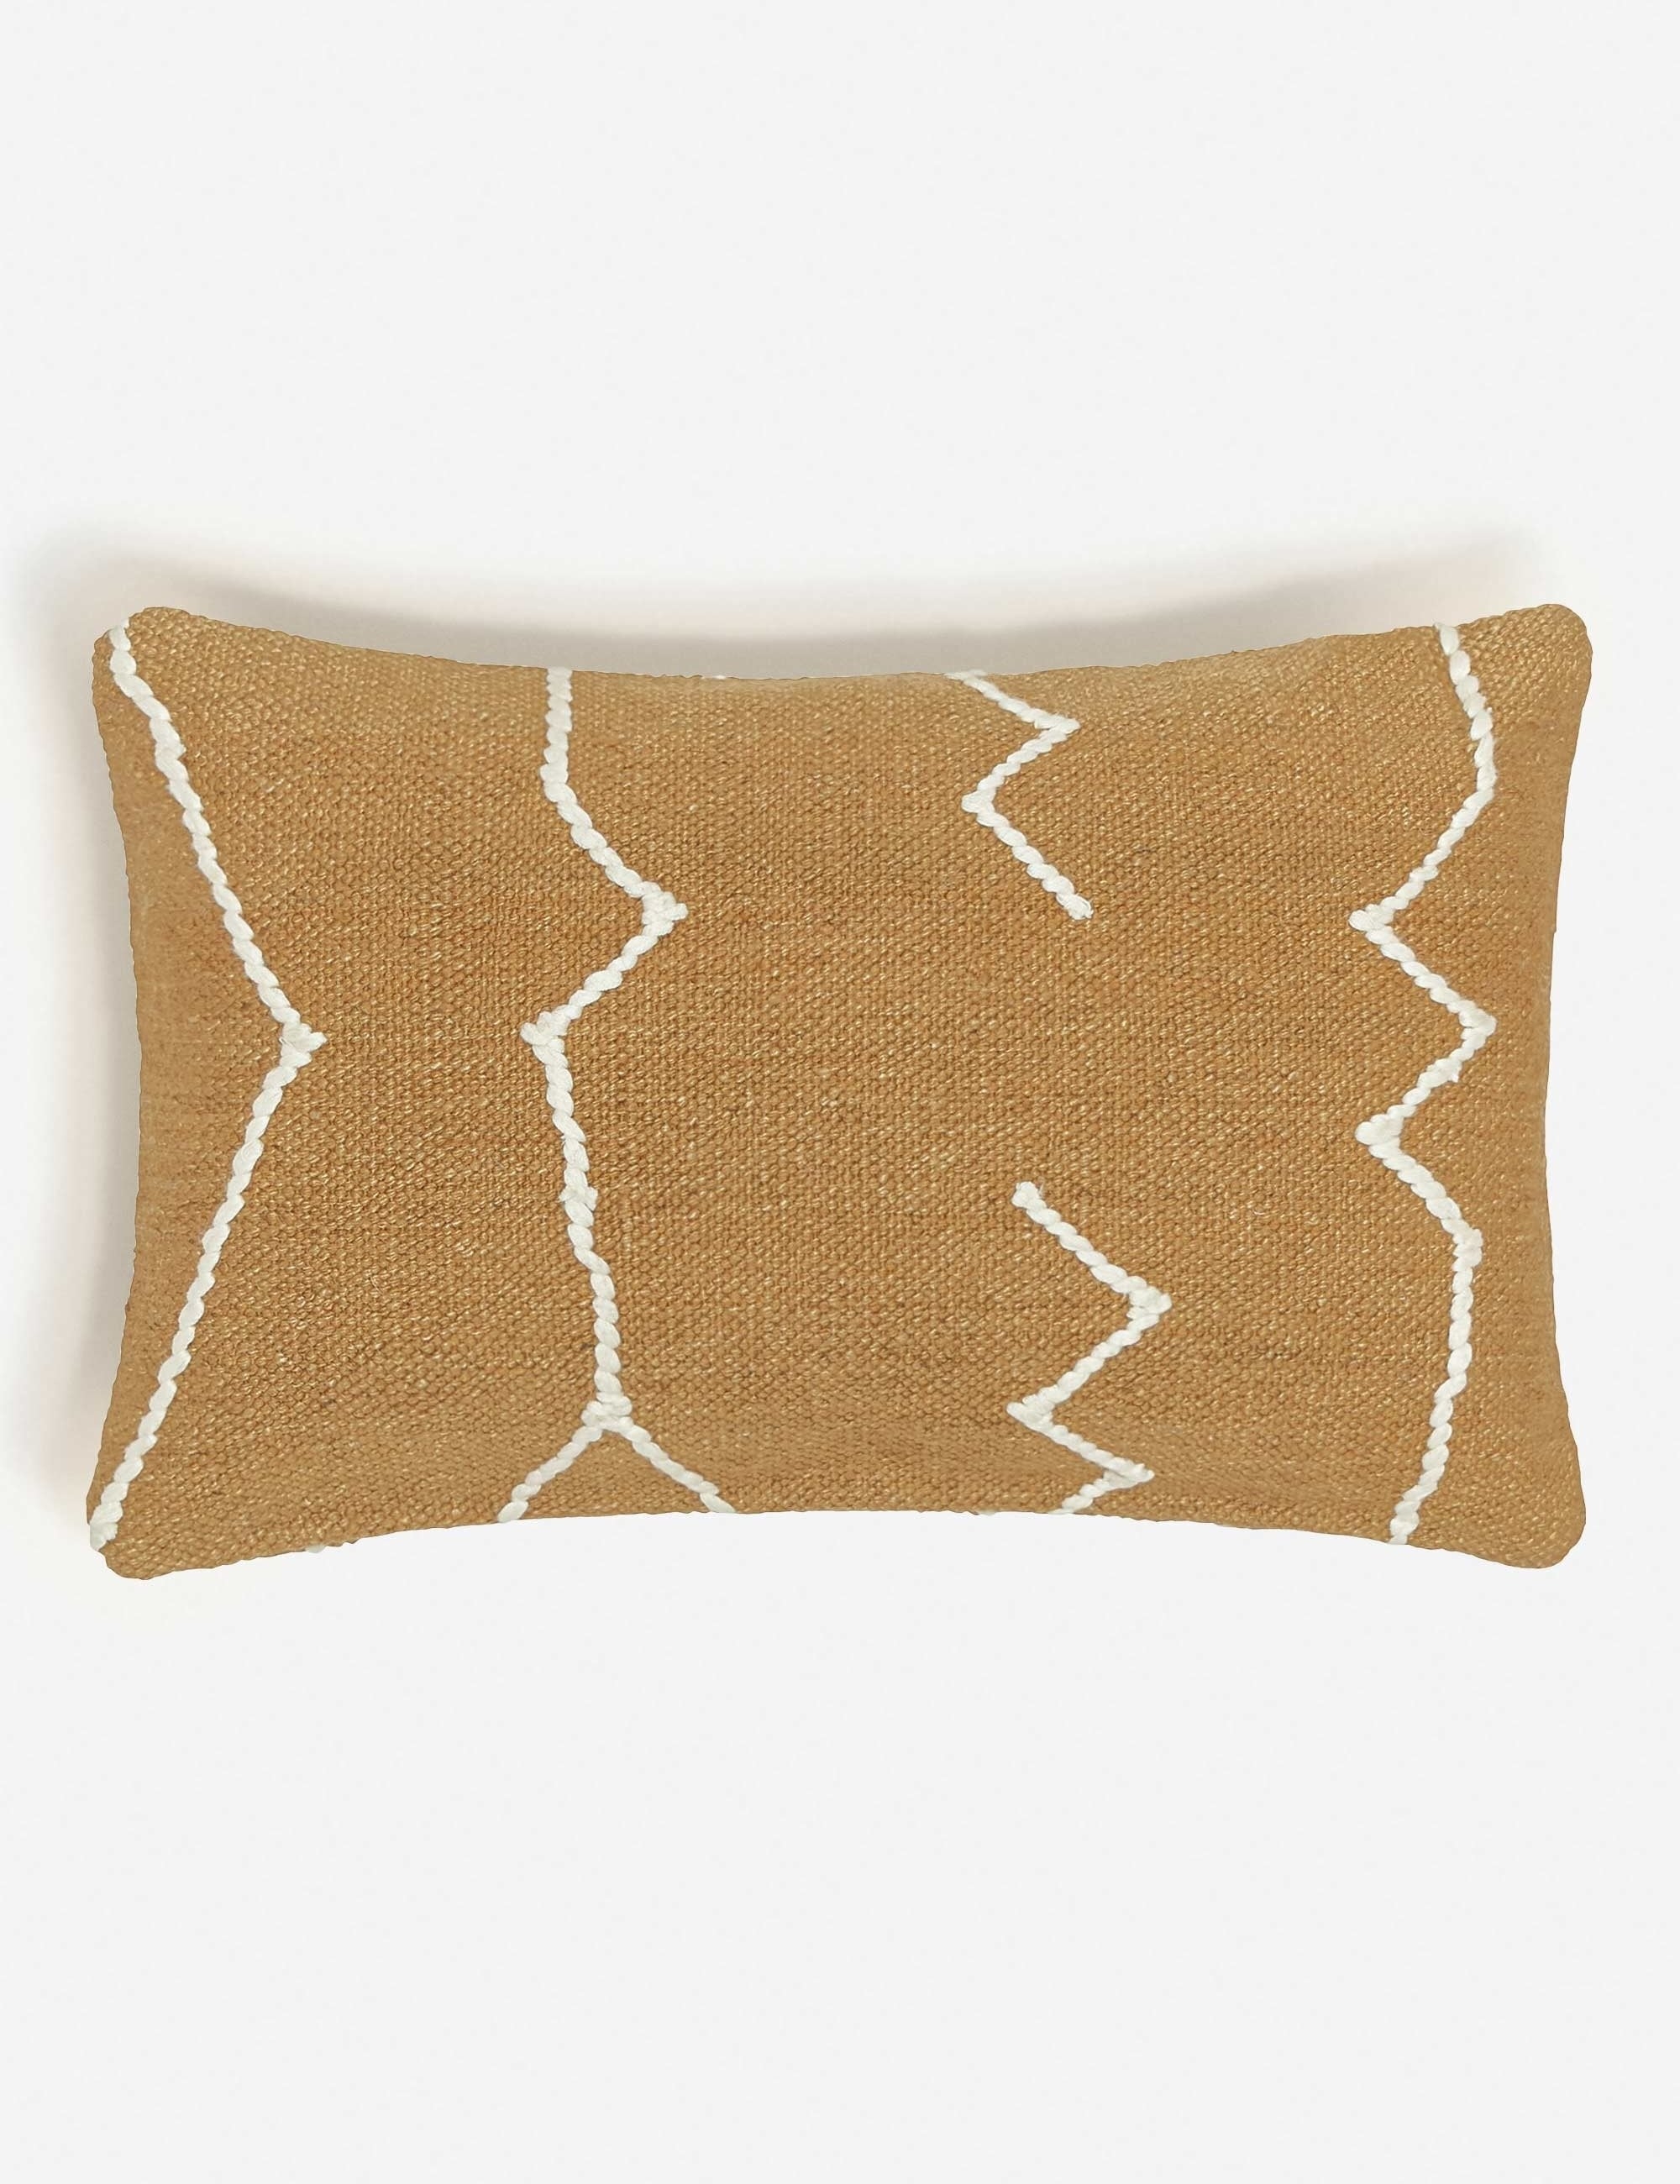 Moroccan Flatweave Pillow By Sarah Sherman Samuel - Black and Natural / 12" x 20" - Image 11